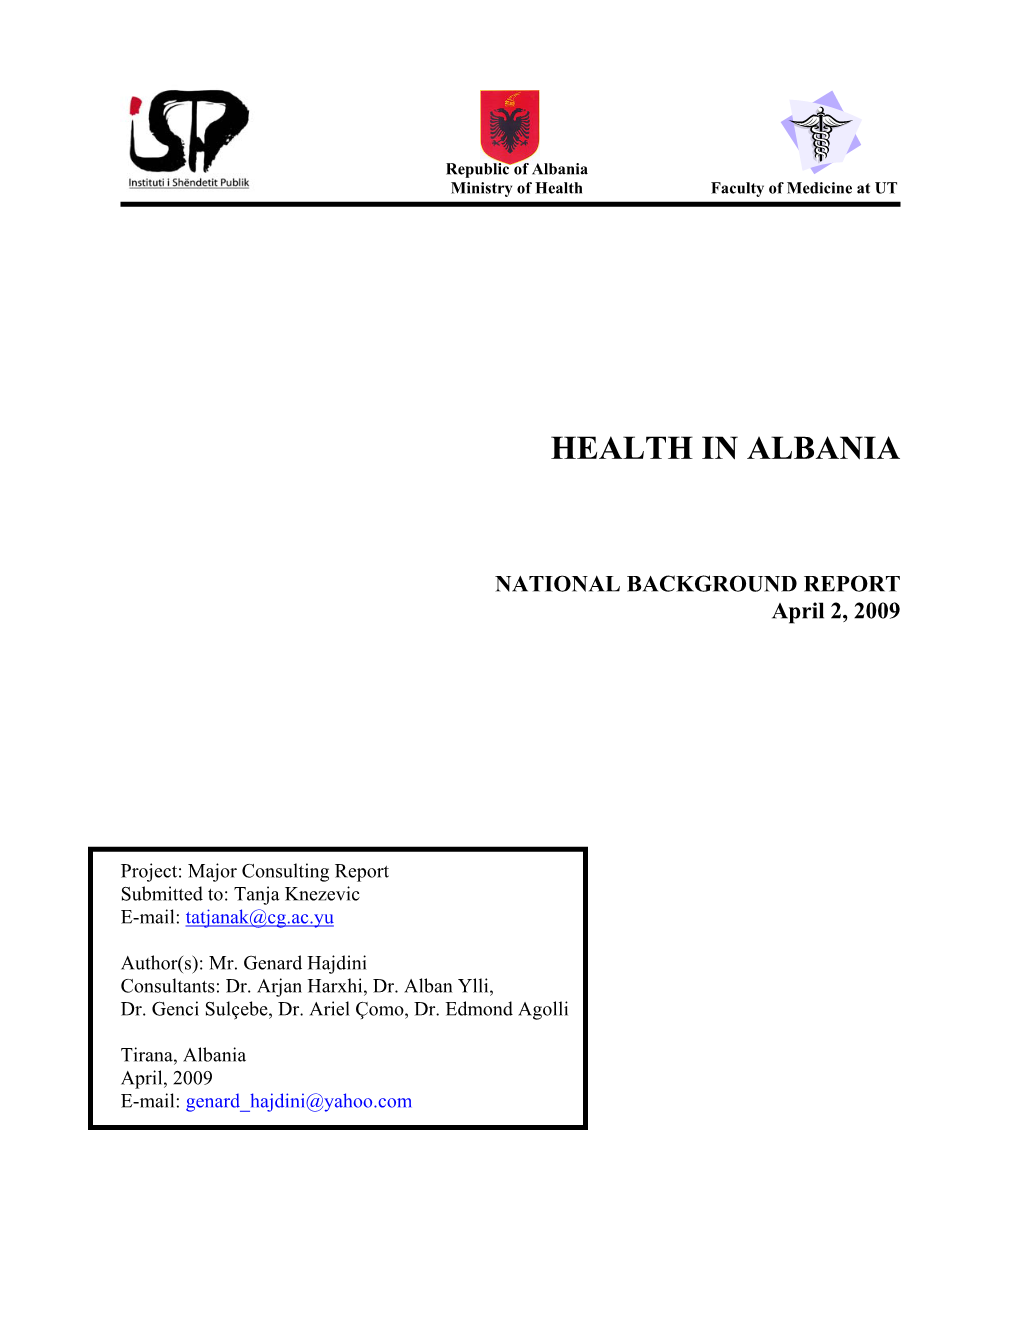 Health in Albania